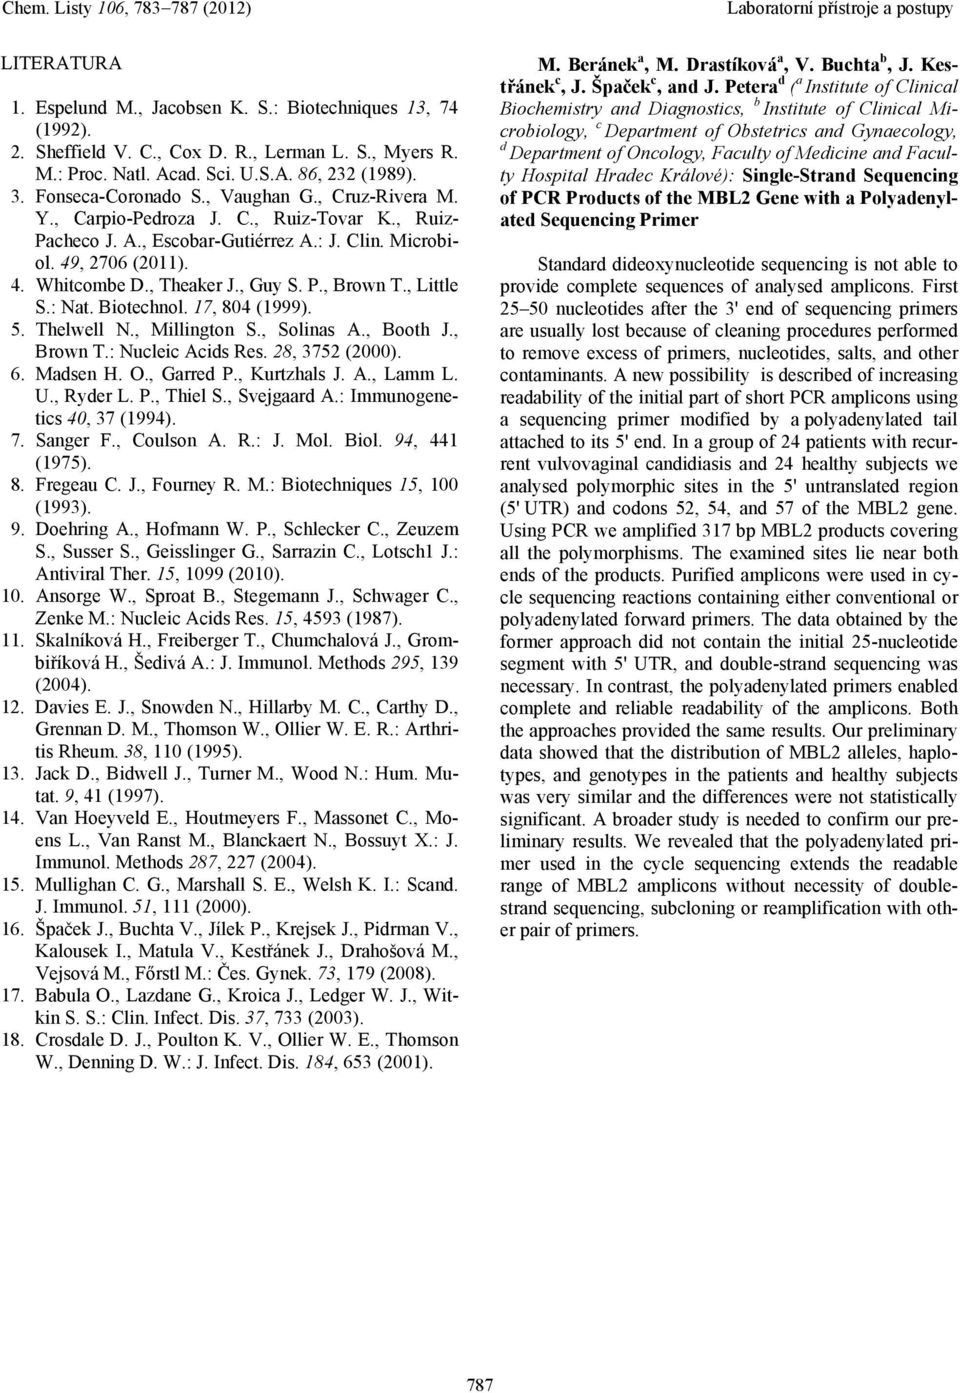 , Little S.: Nat. Biotechnol. 17, 804 (1999). 5. Thelwell N., Millington S., Solinas A., Booth J., Brown T.: Nucleic Acids Res. 28, 3752 (2000). 6. Madsen H. O., Garred P., Kurtzhals J. A., Lamm L. U.